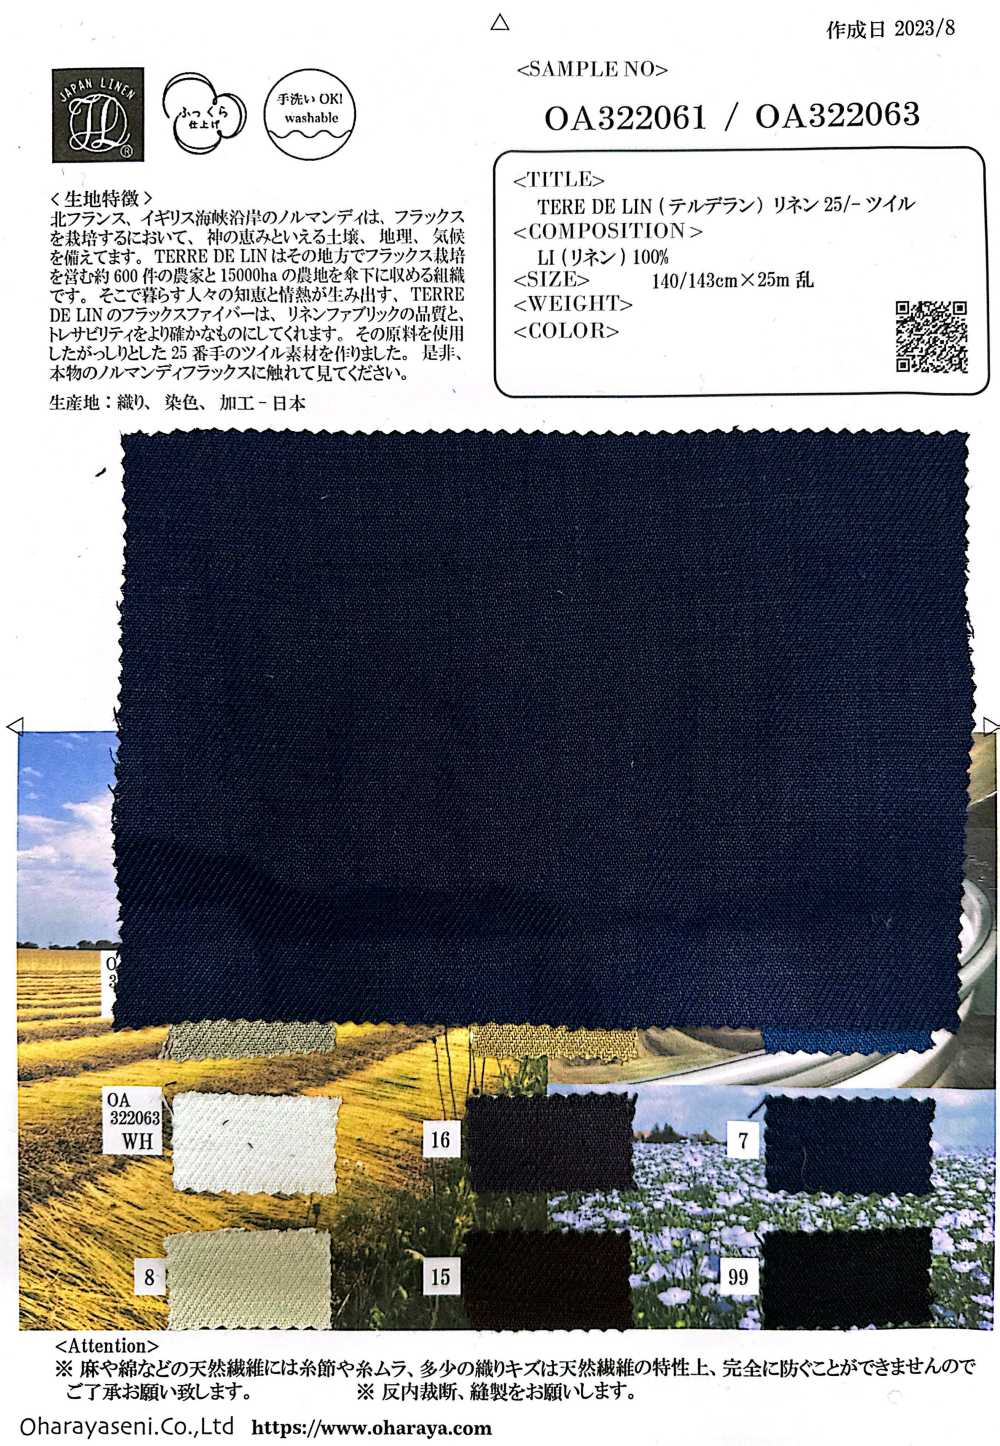 OA322063 TERE DE LIN Lin 25/-Twill[Fabrication De Textile] Oharayaseni